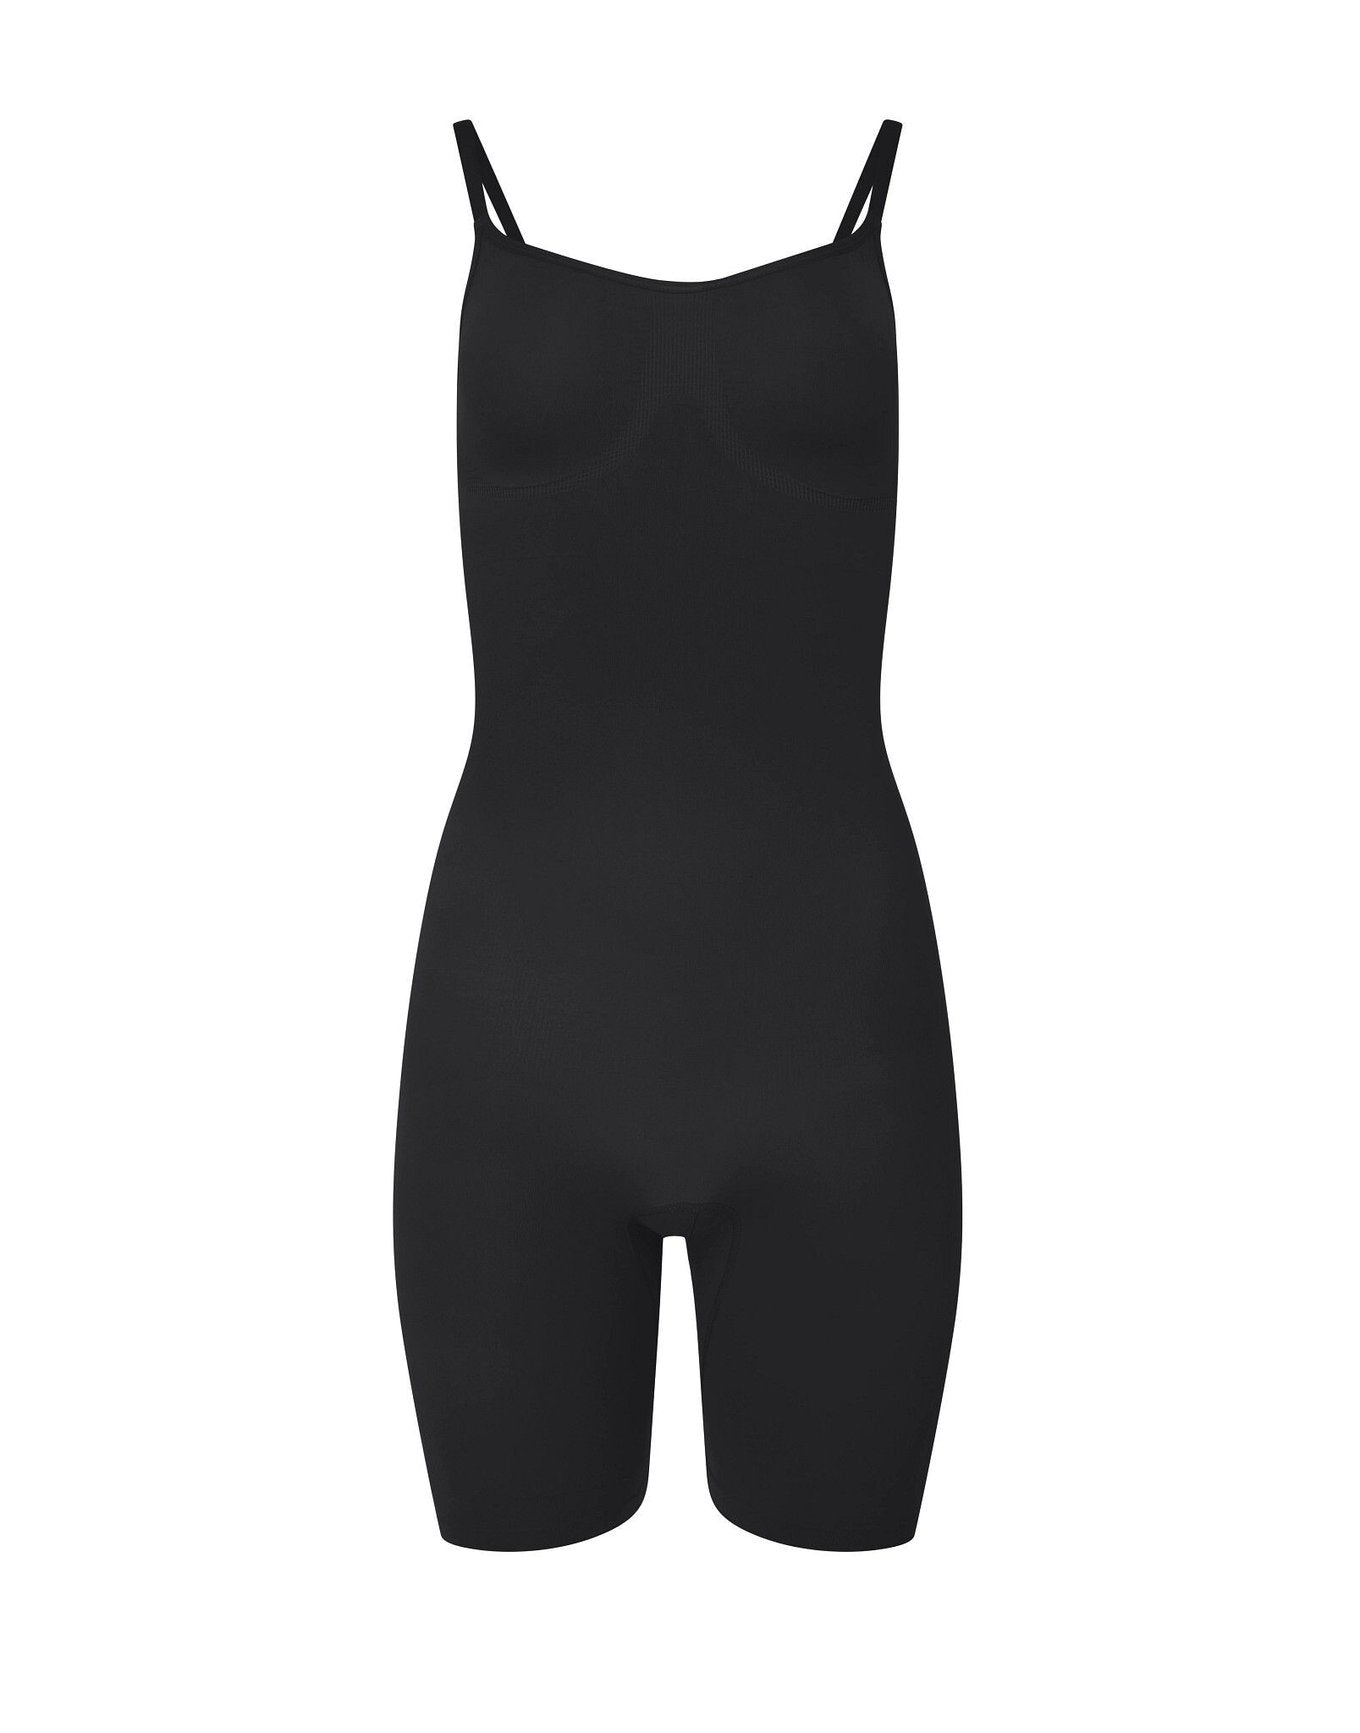 nueskin Analise High-Compression Bodysuit in color Jet Black and shape bodysuit